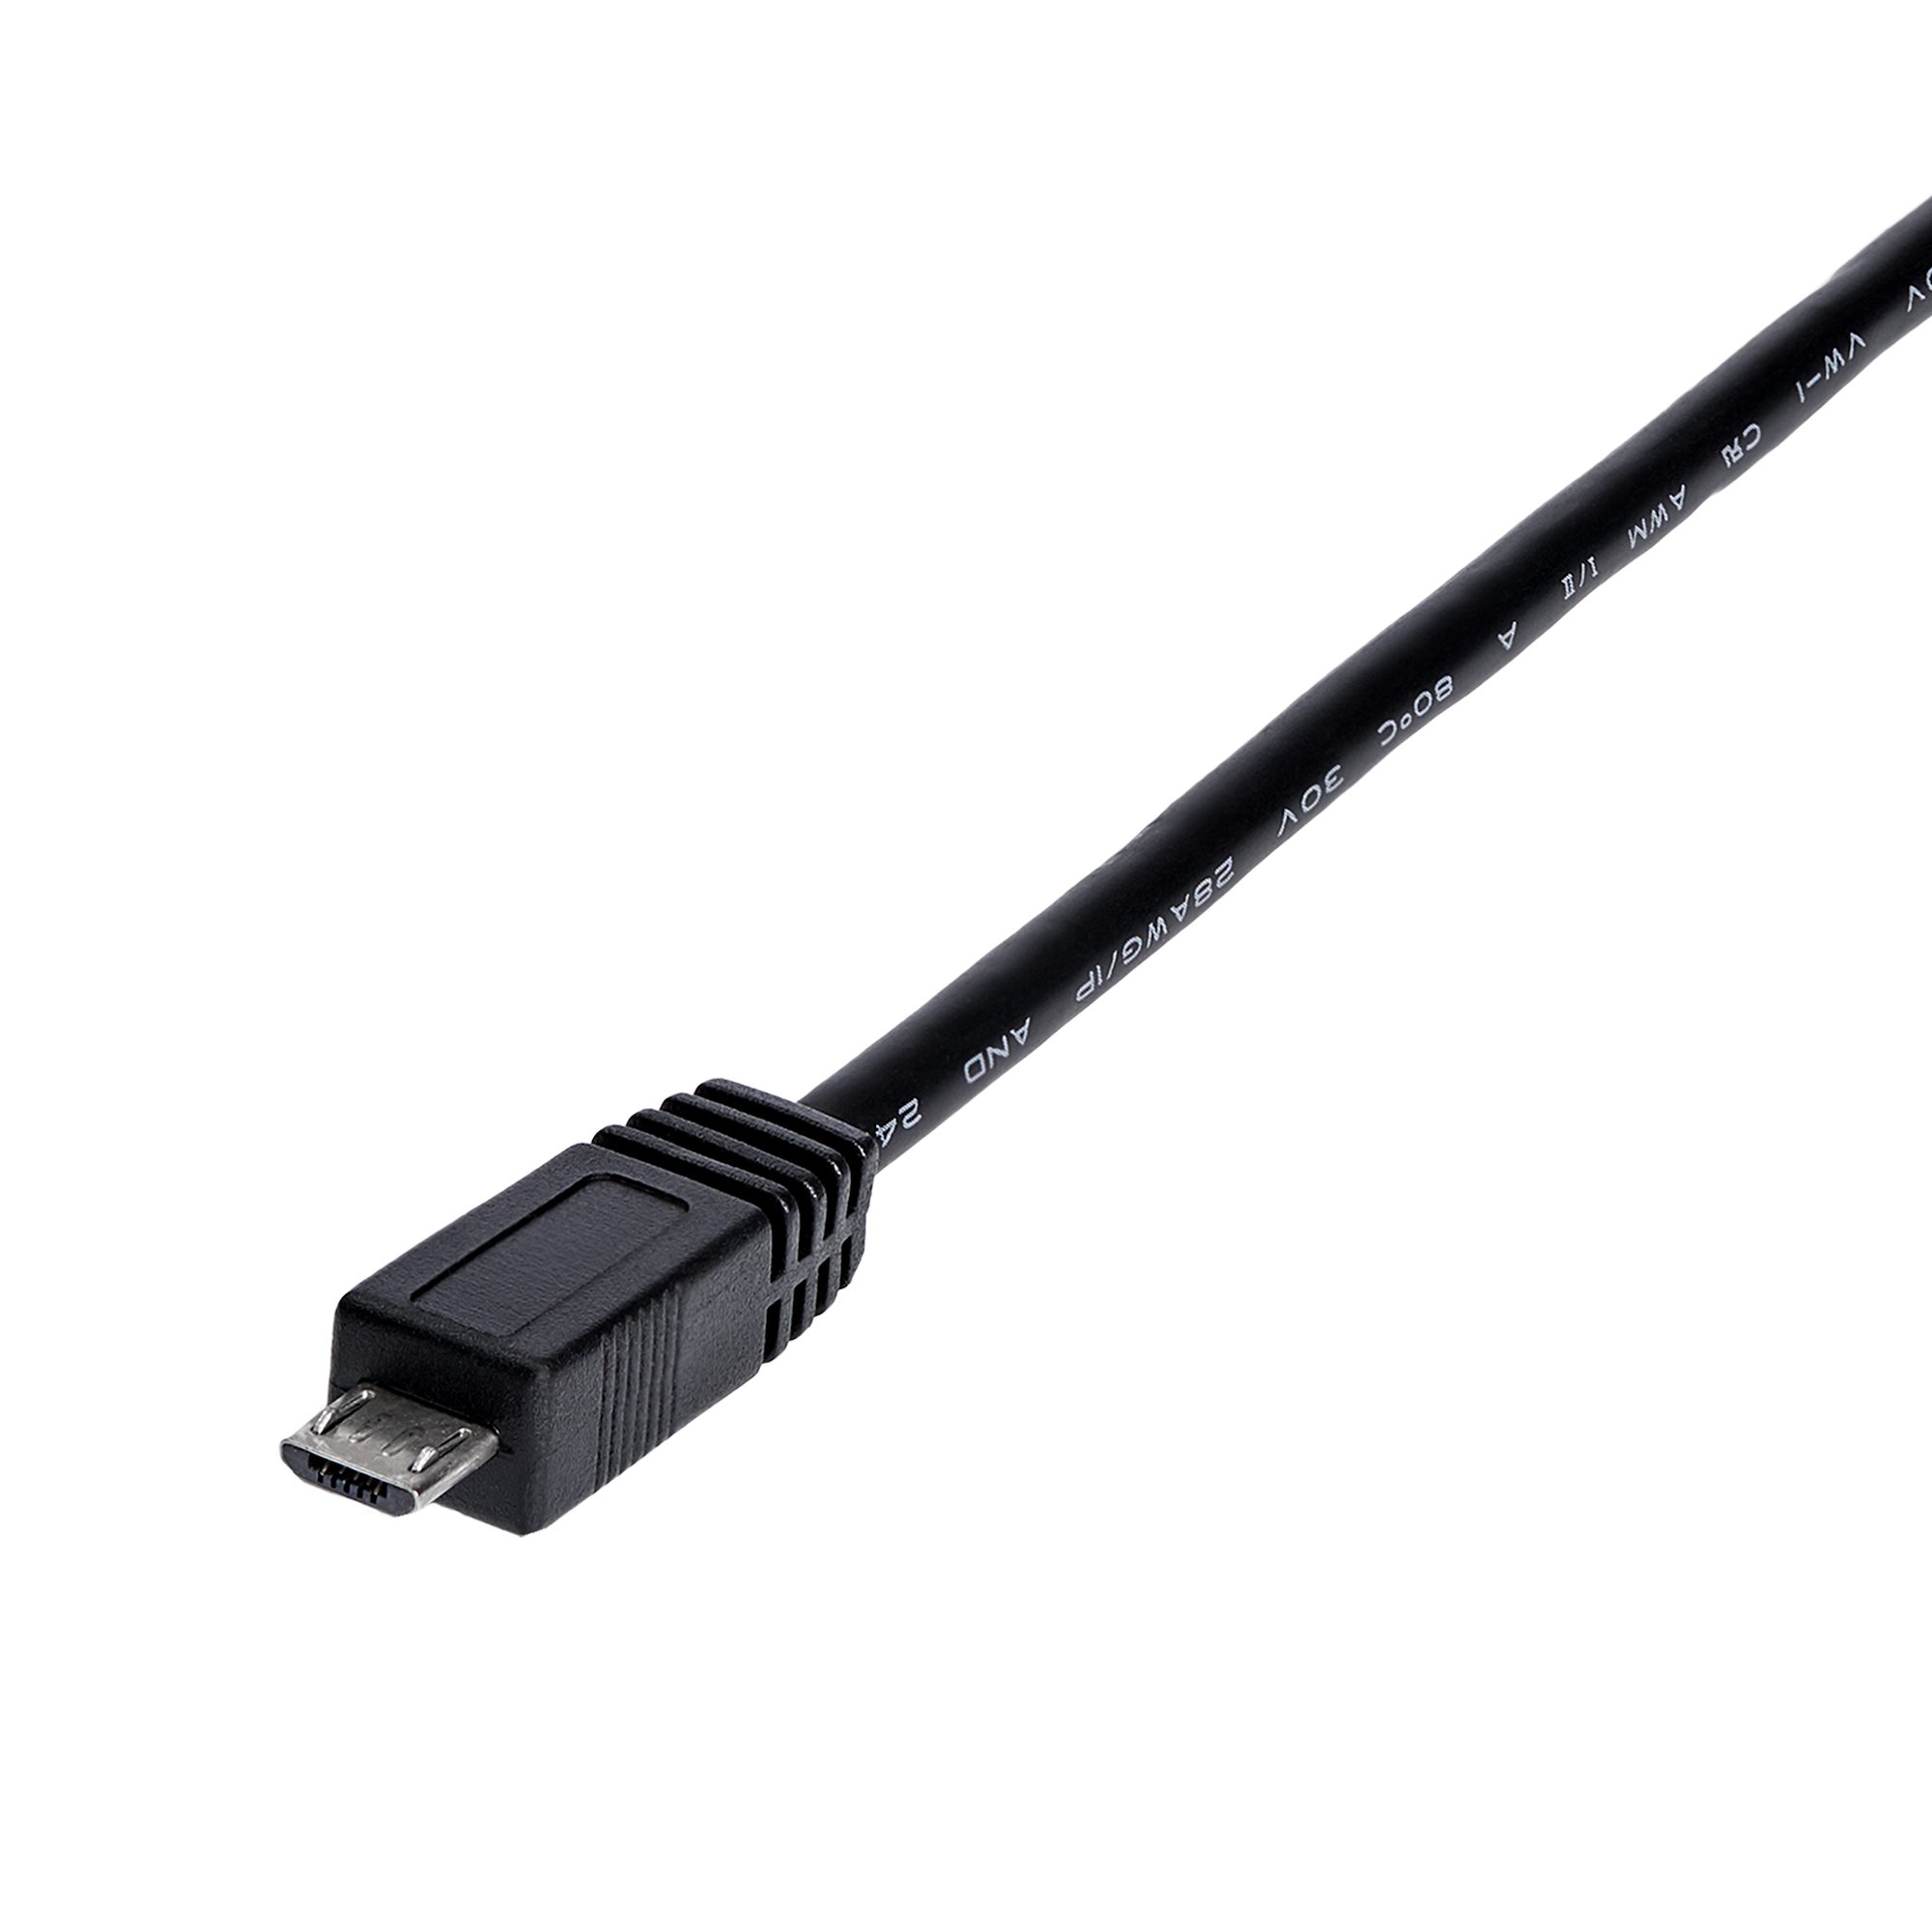 3 USB Y for External Hard Drive - Micro USB | StarTech.com